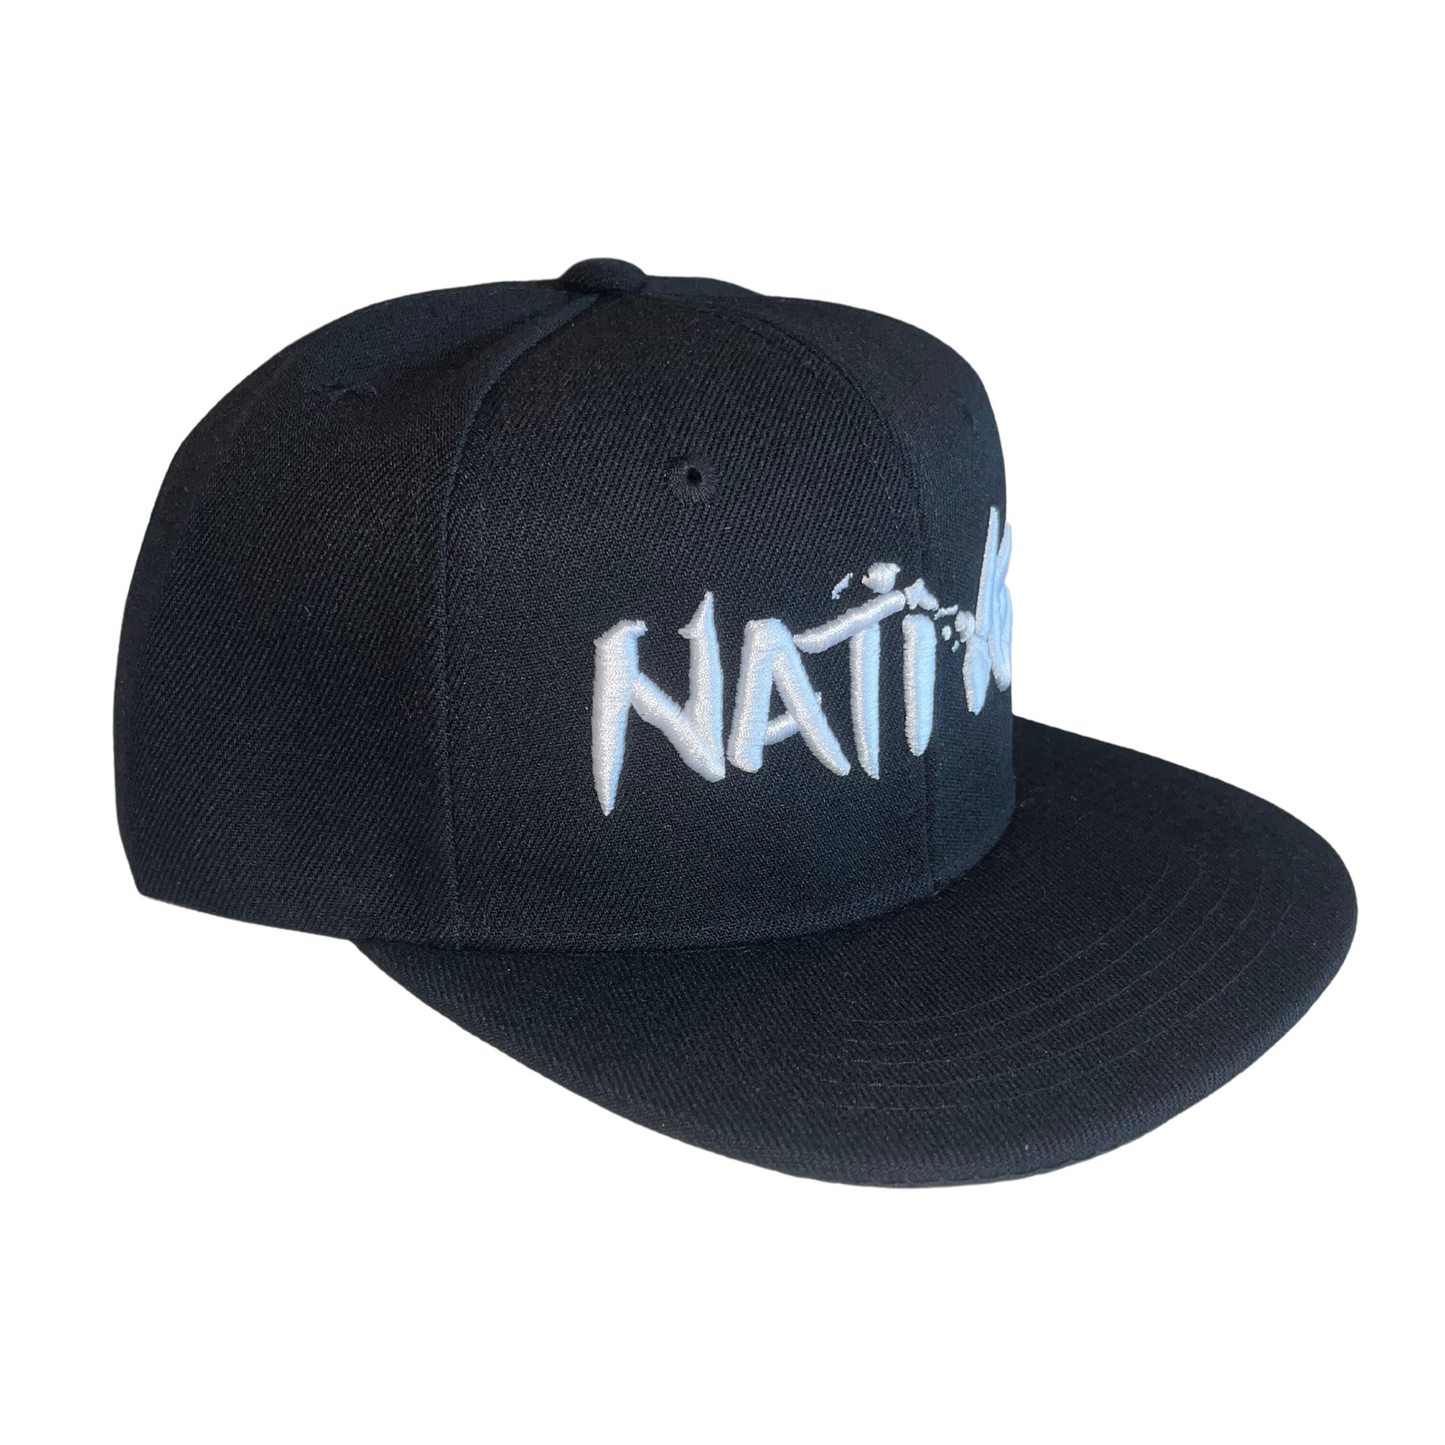 HILV9 Native Black Snapback Hat